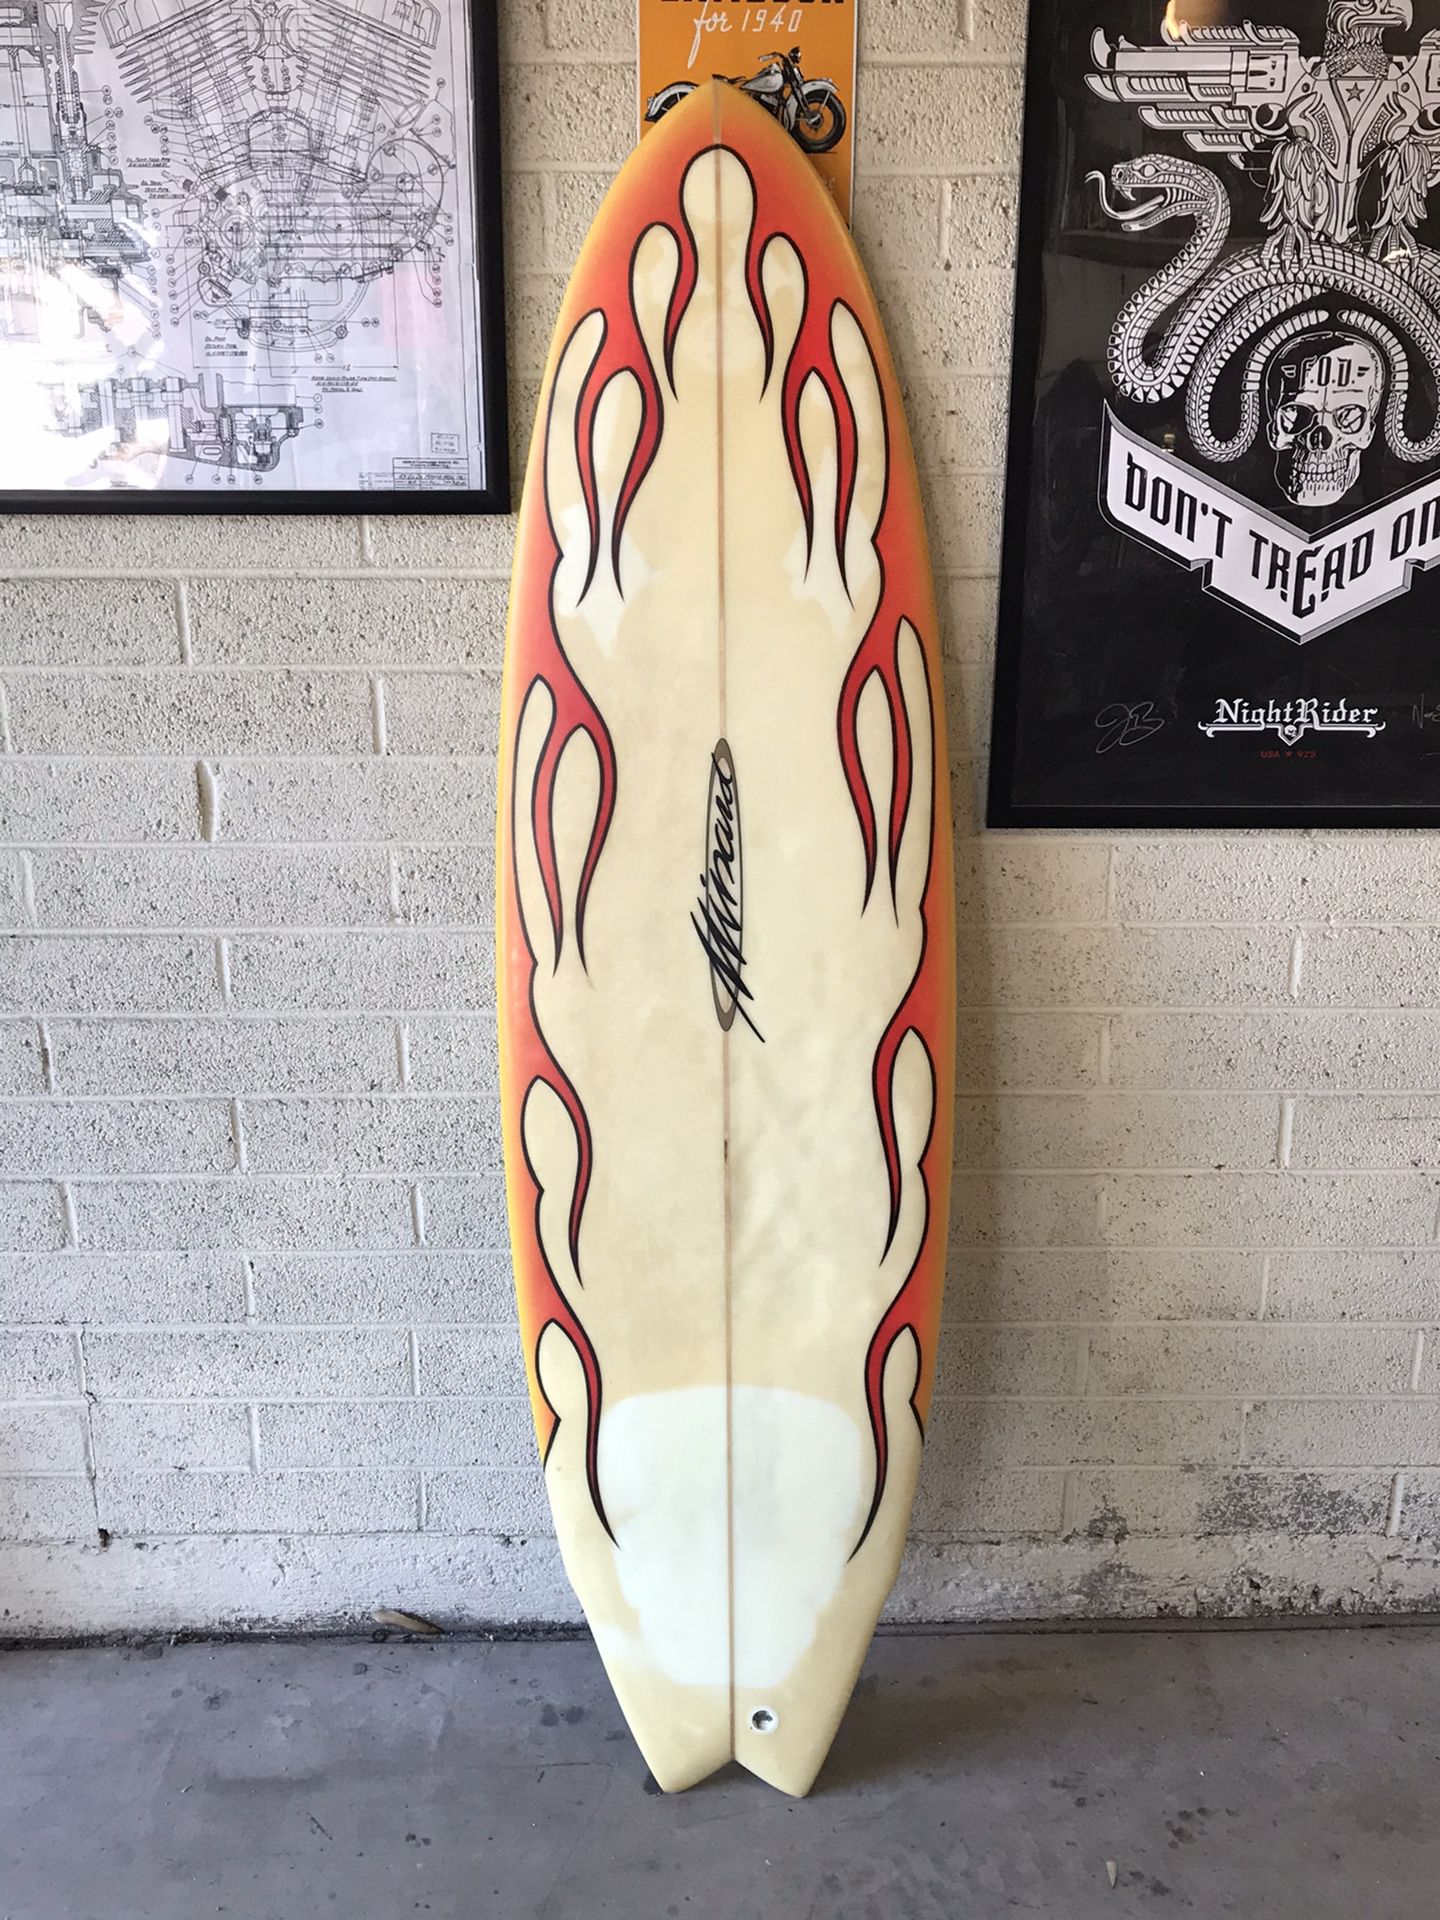 Minard flamed surfboard. 1986